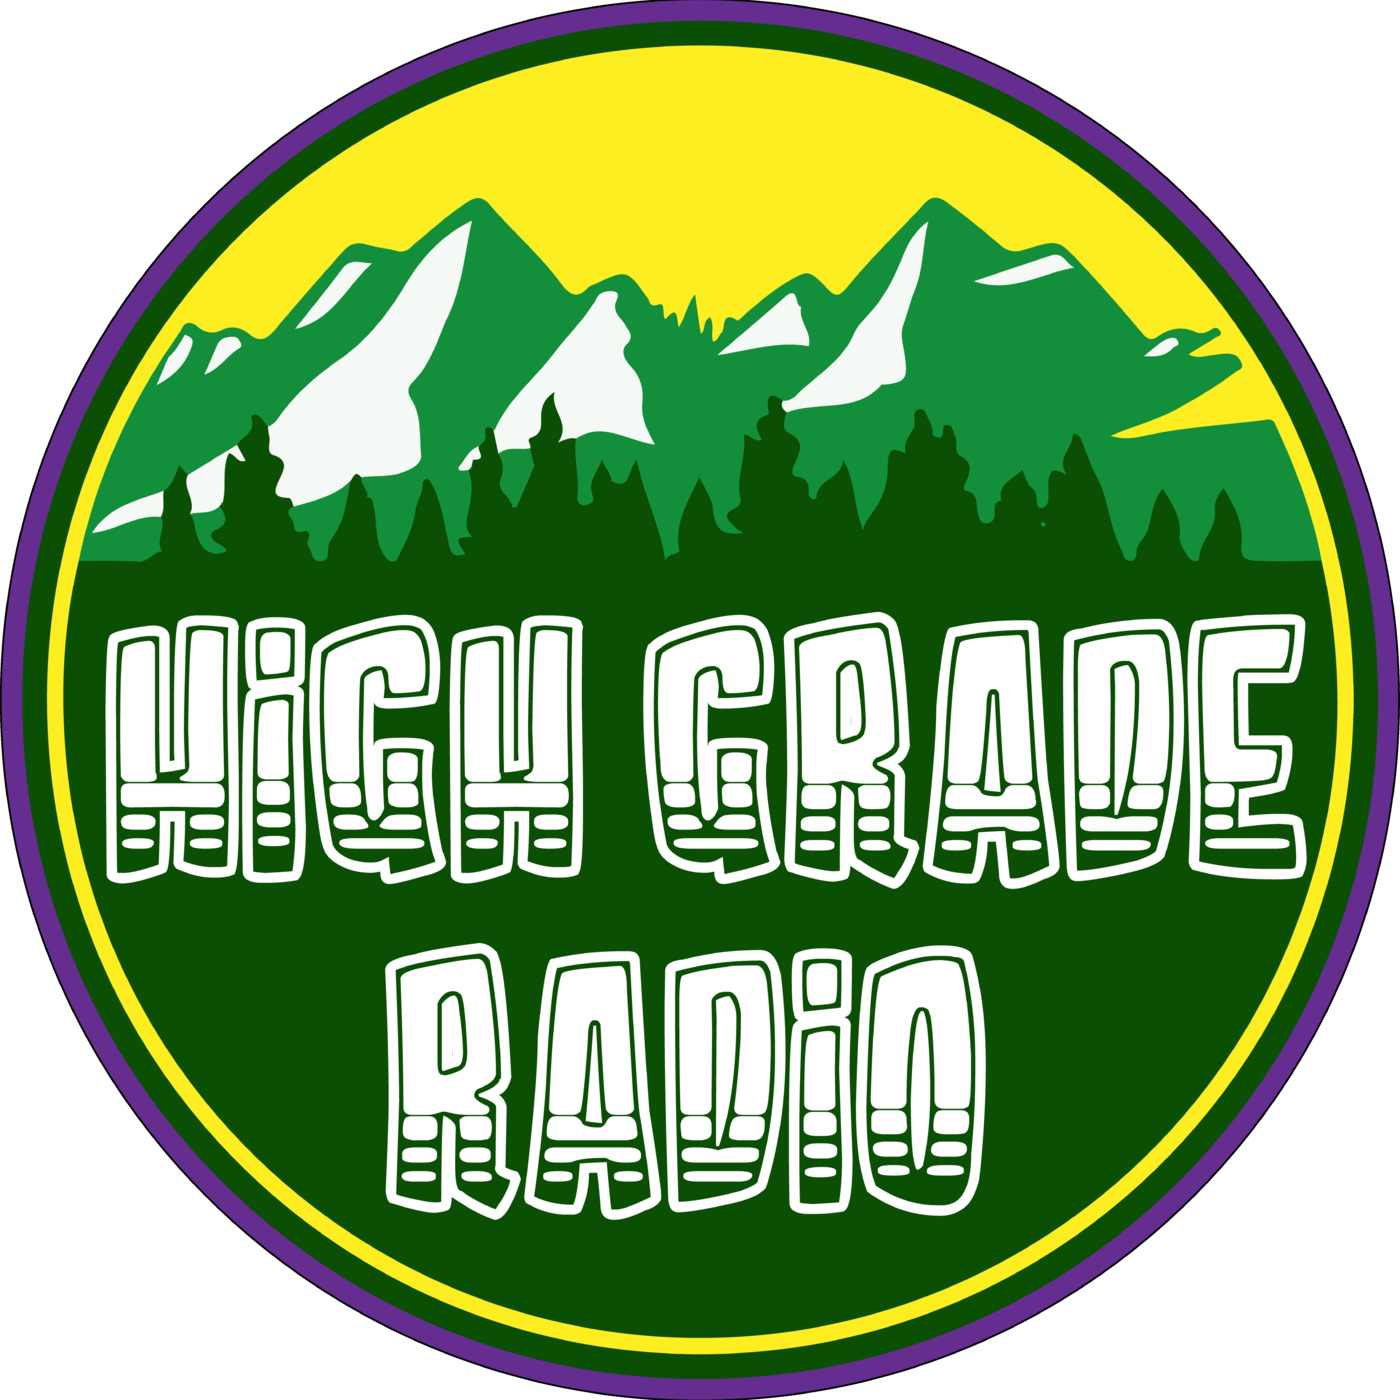 High Grade Radio Podcast